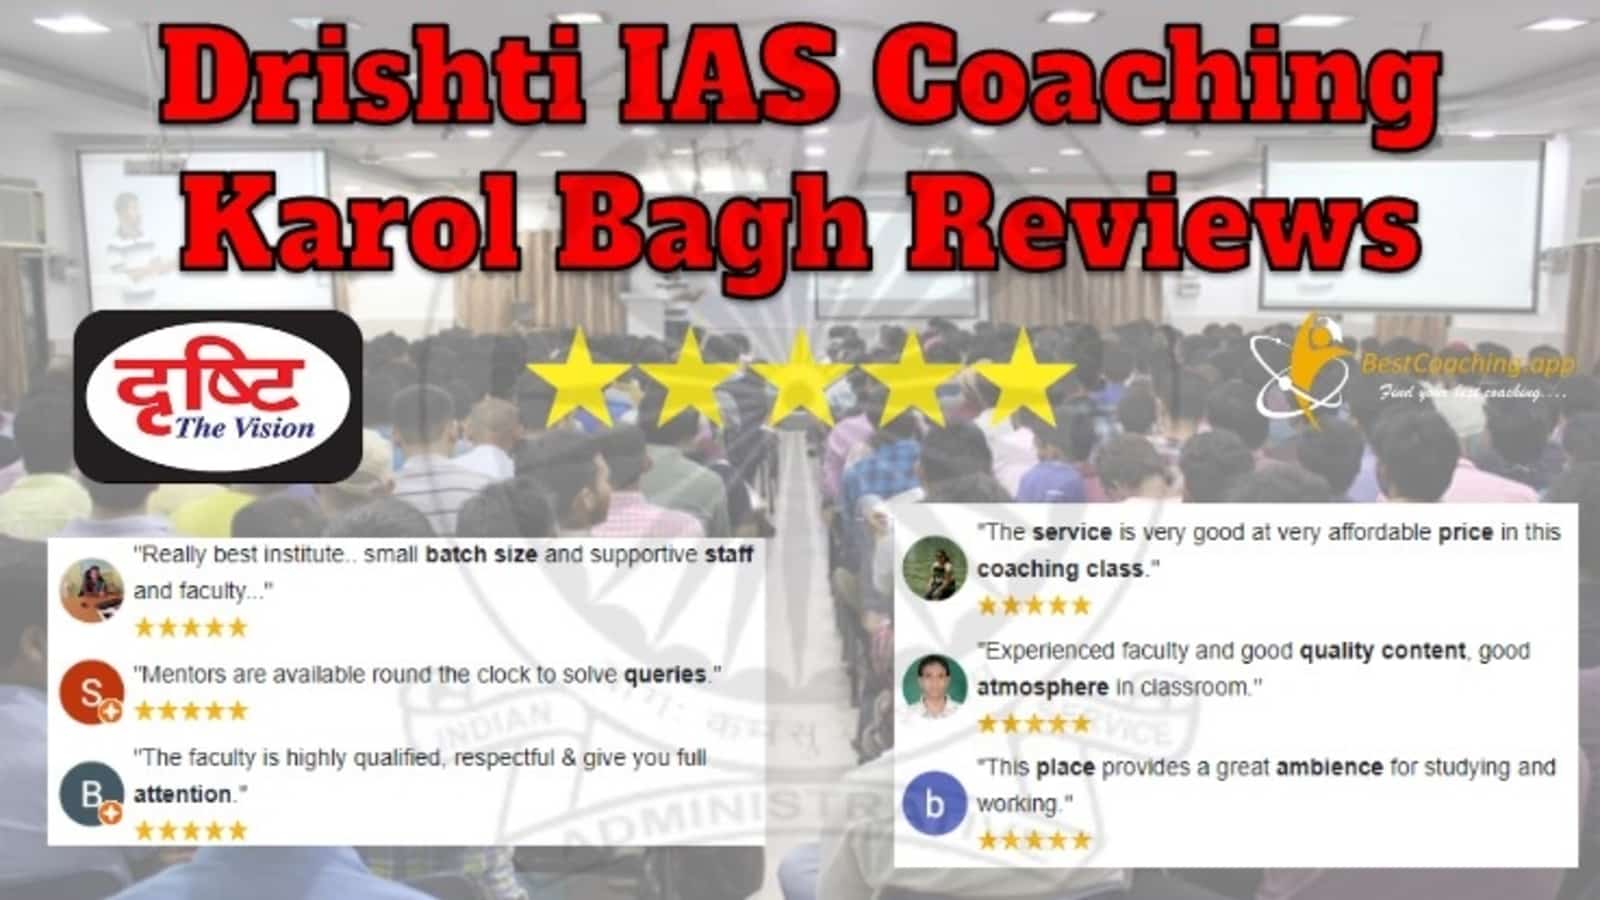 Drishti IAS Coaching in Karol Bagh Reviews